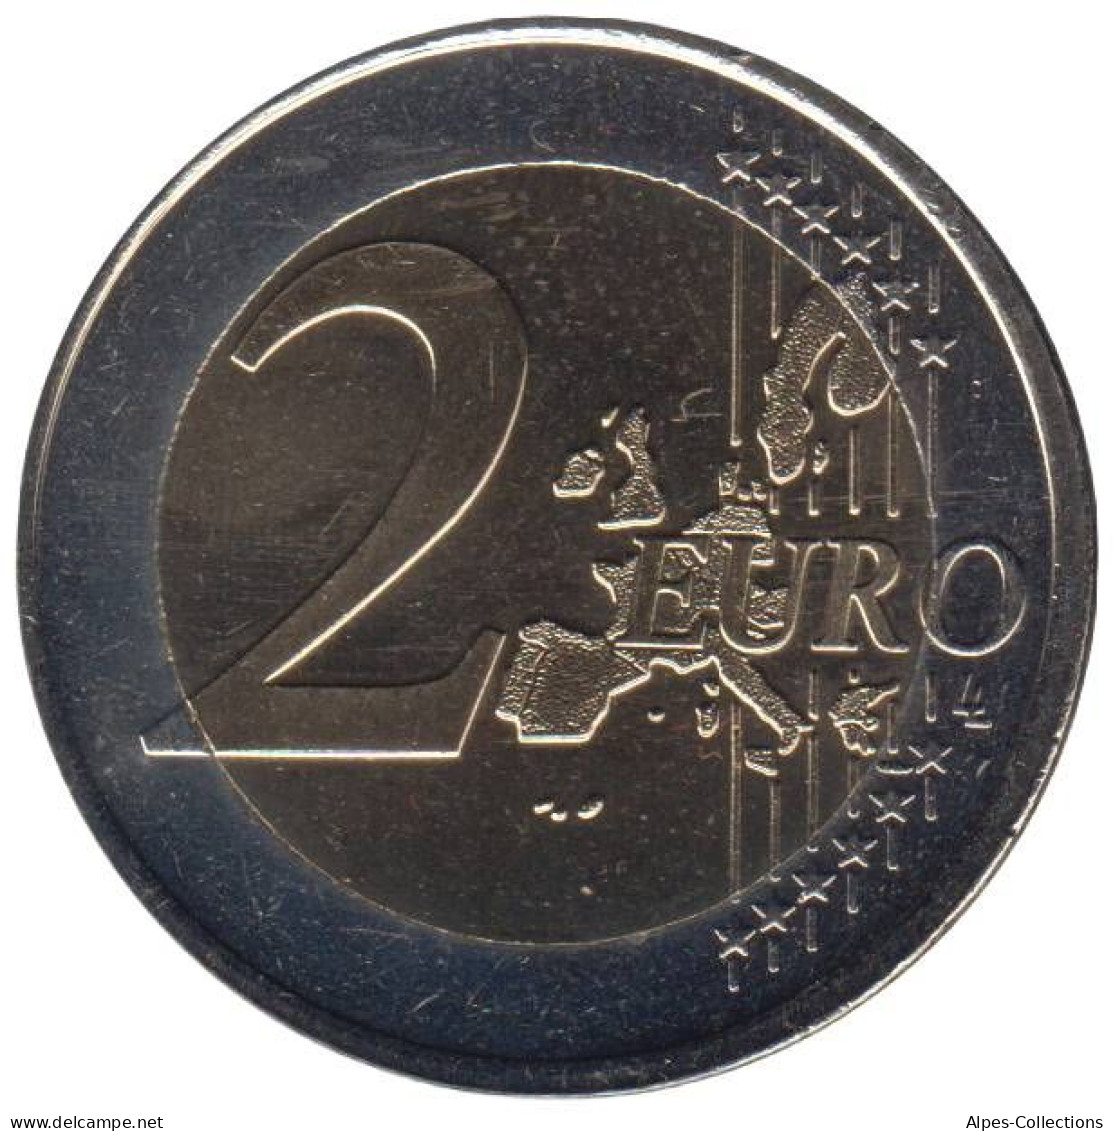 PB20001.1 - PAYS-BAS - 2 Euros - 2001 - Netherlands